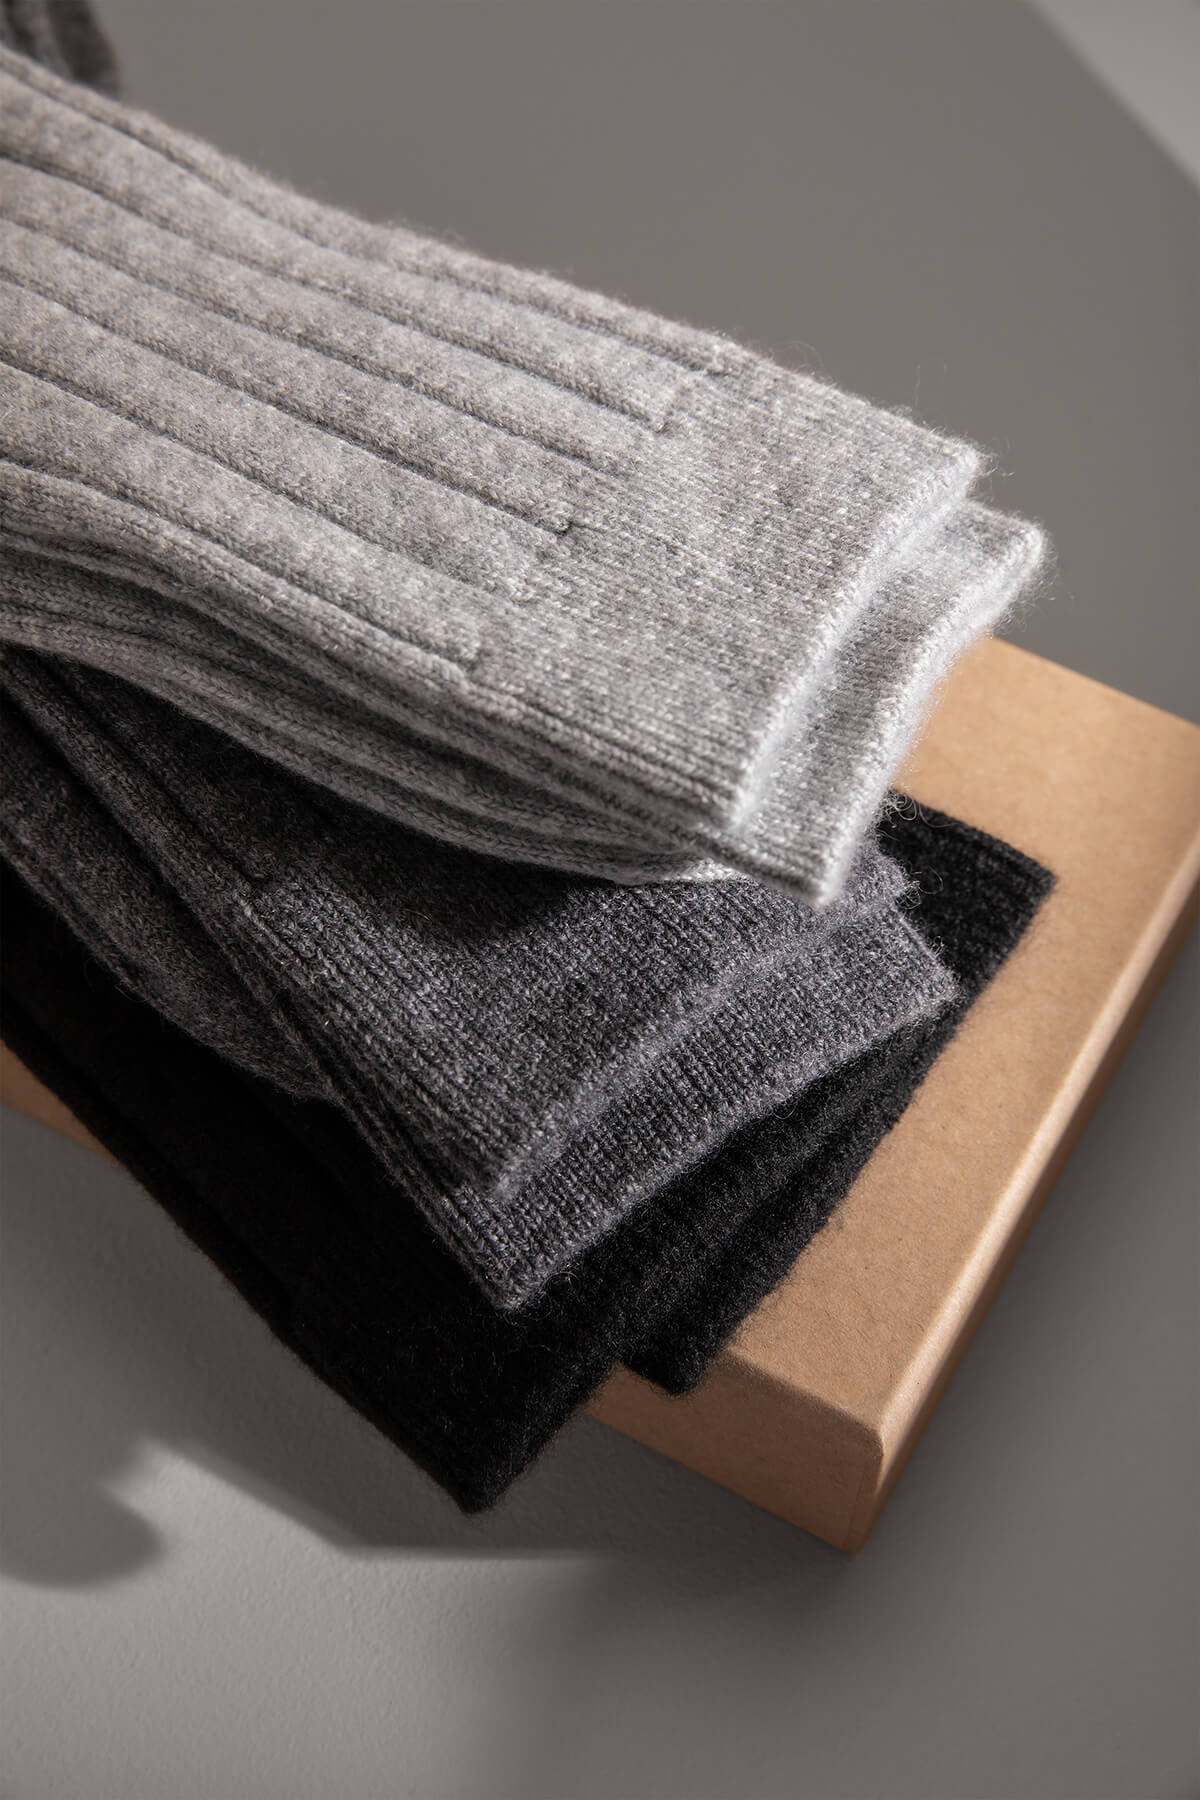 Men's 'Good for the Sole' Cashmere Socks Gift Set